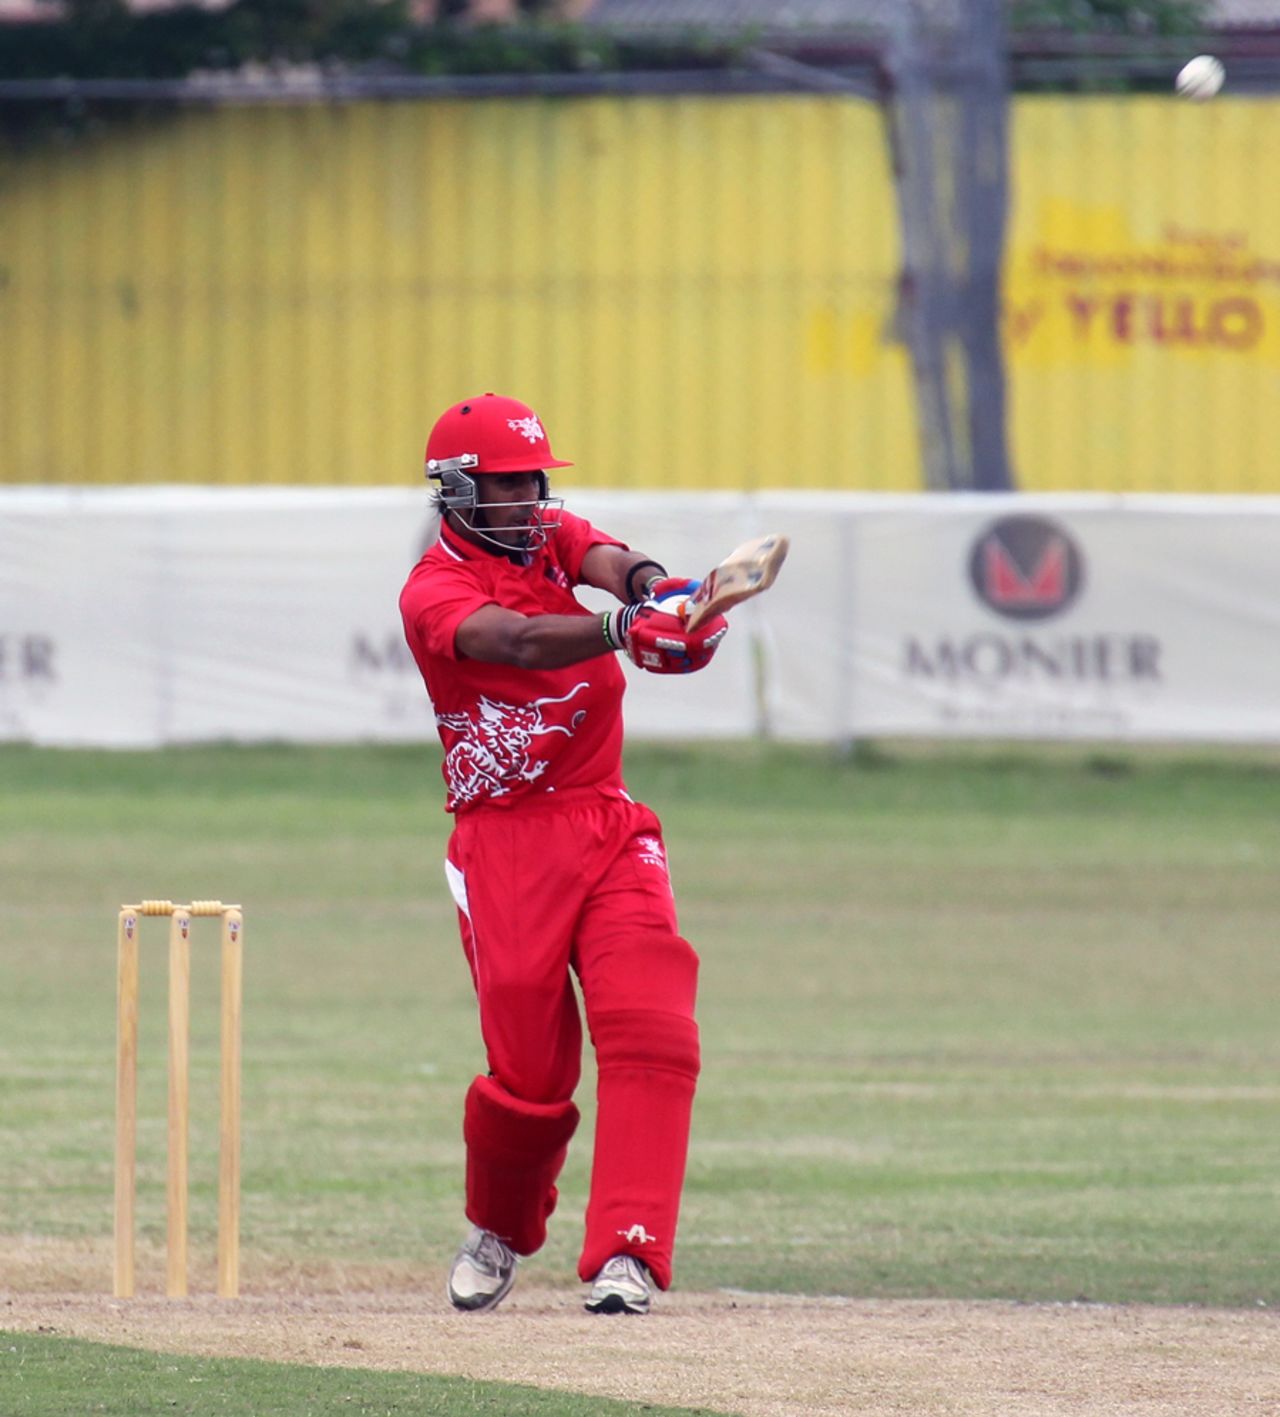 HK captain Waqas Barkat top scored with 31 against PNG in the Air Niugini Super Series 2012 at Amini Park, Port Moresby